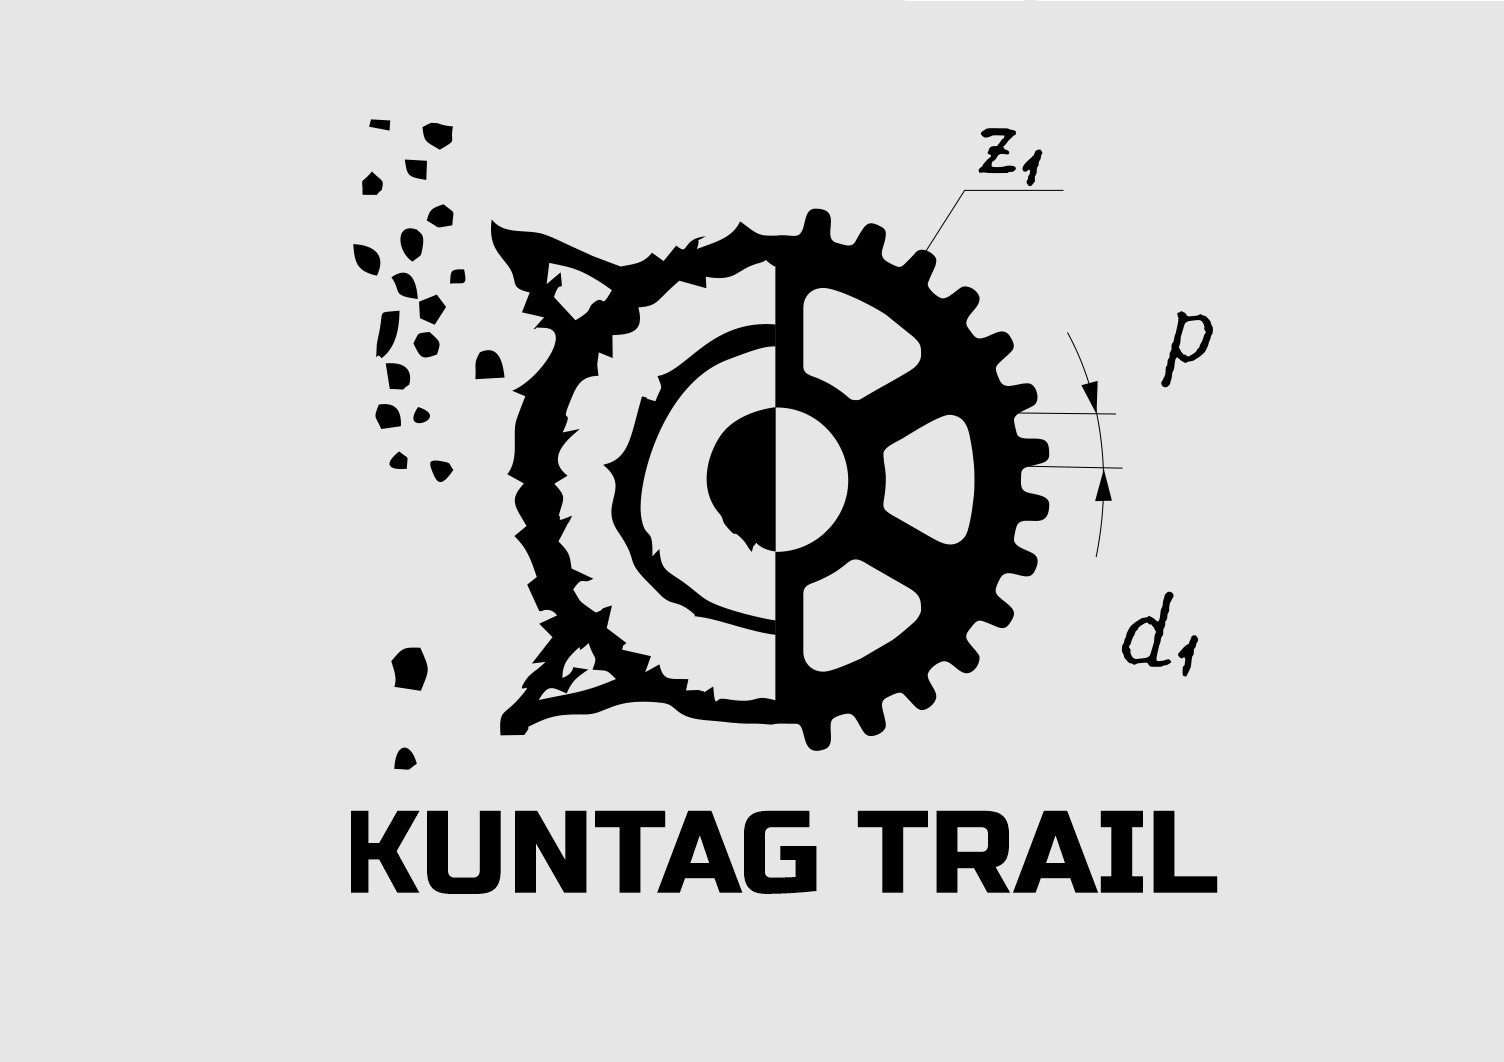 Kuntag trail